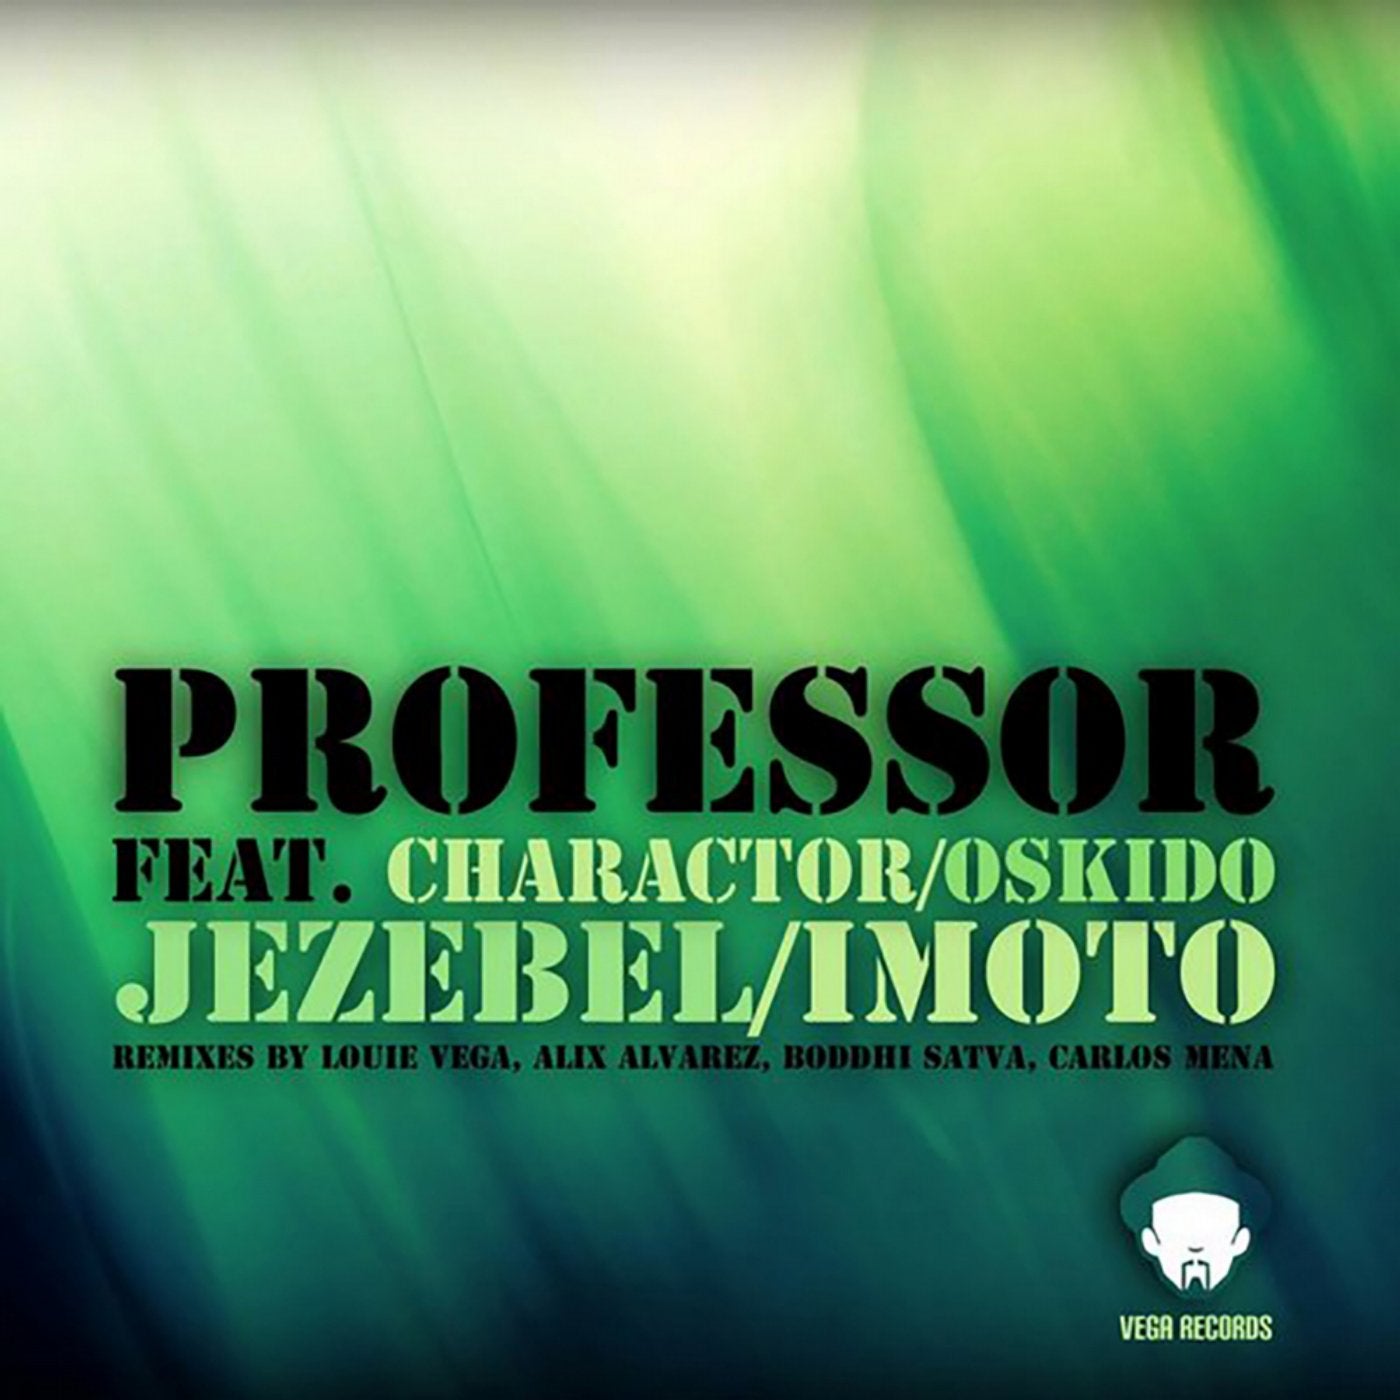 Jezebel: Imoto Remixes